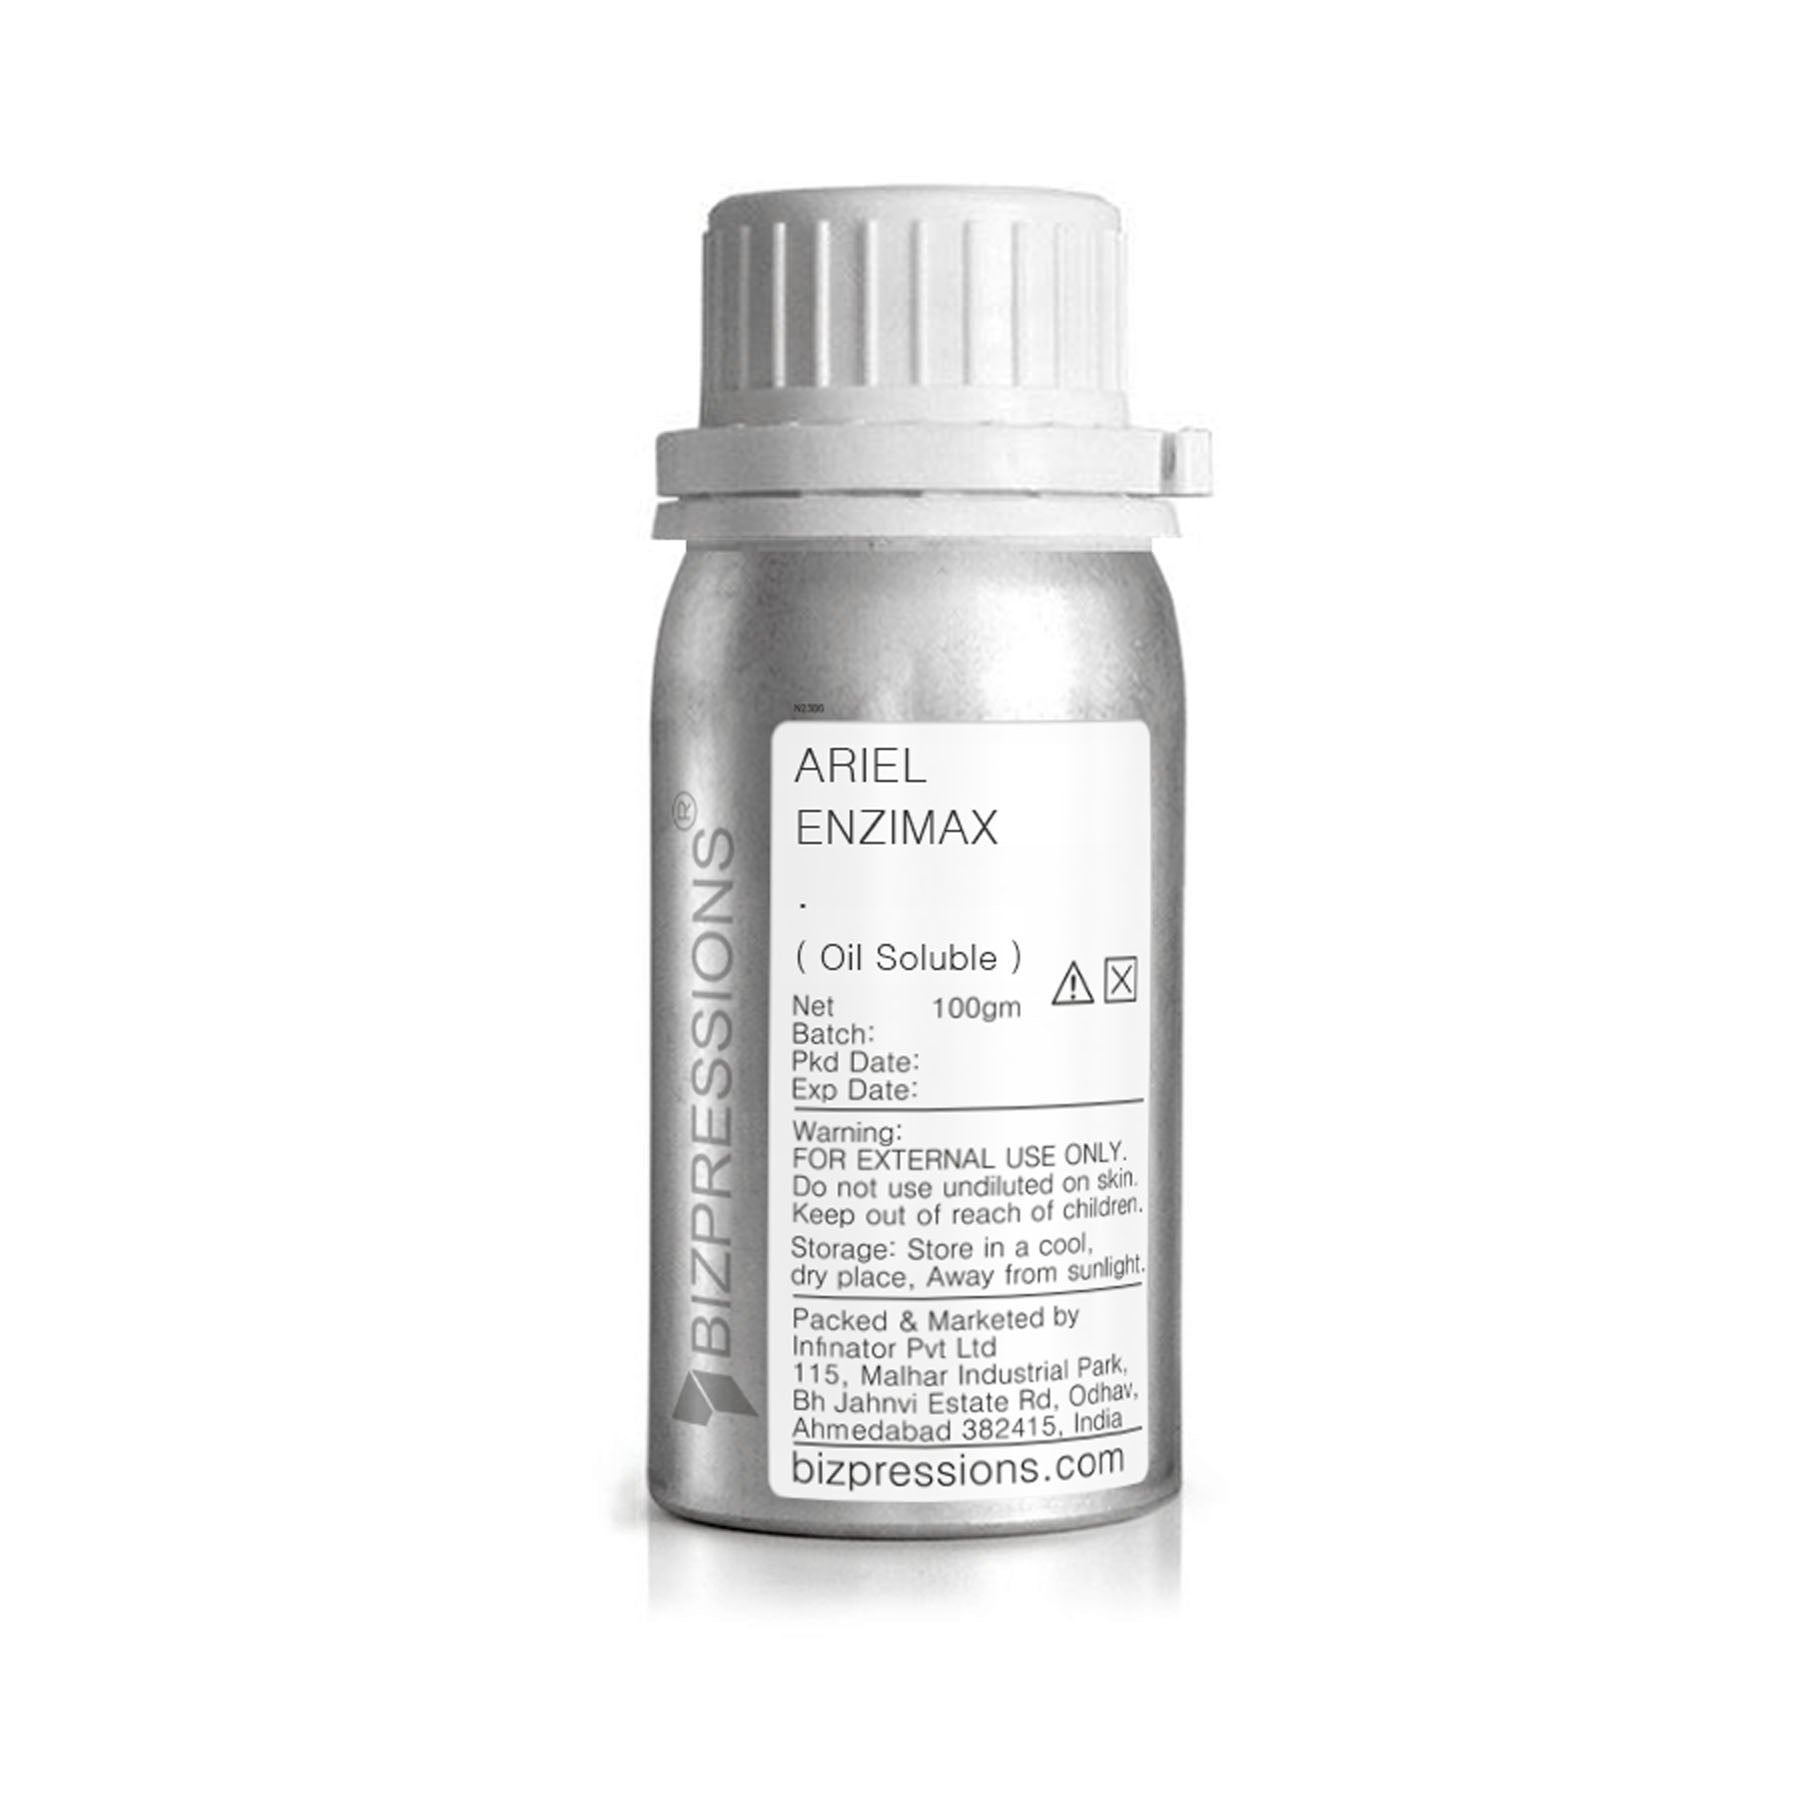 ARIEL ENZIMAX - Fragrance ( Oil Soluble ) - 100 gm